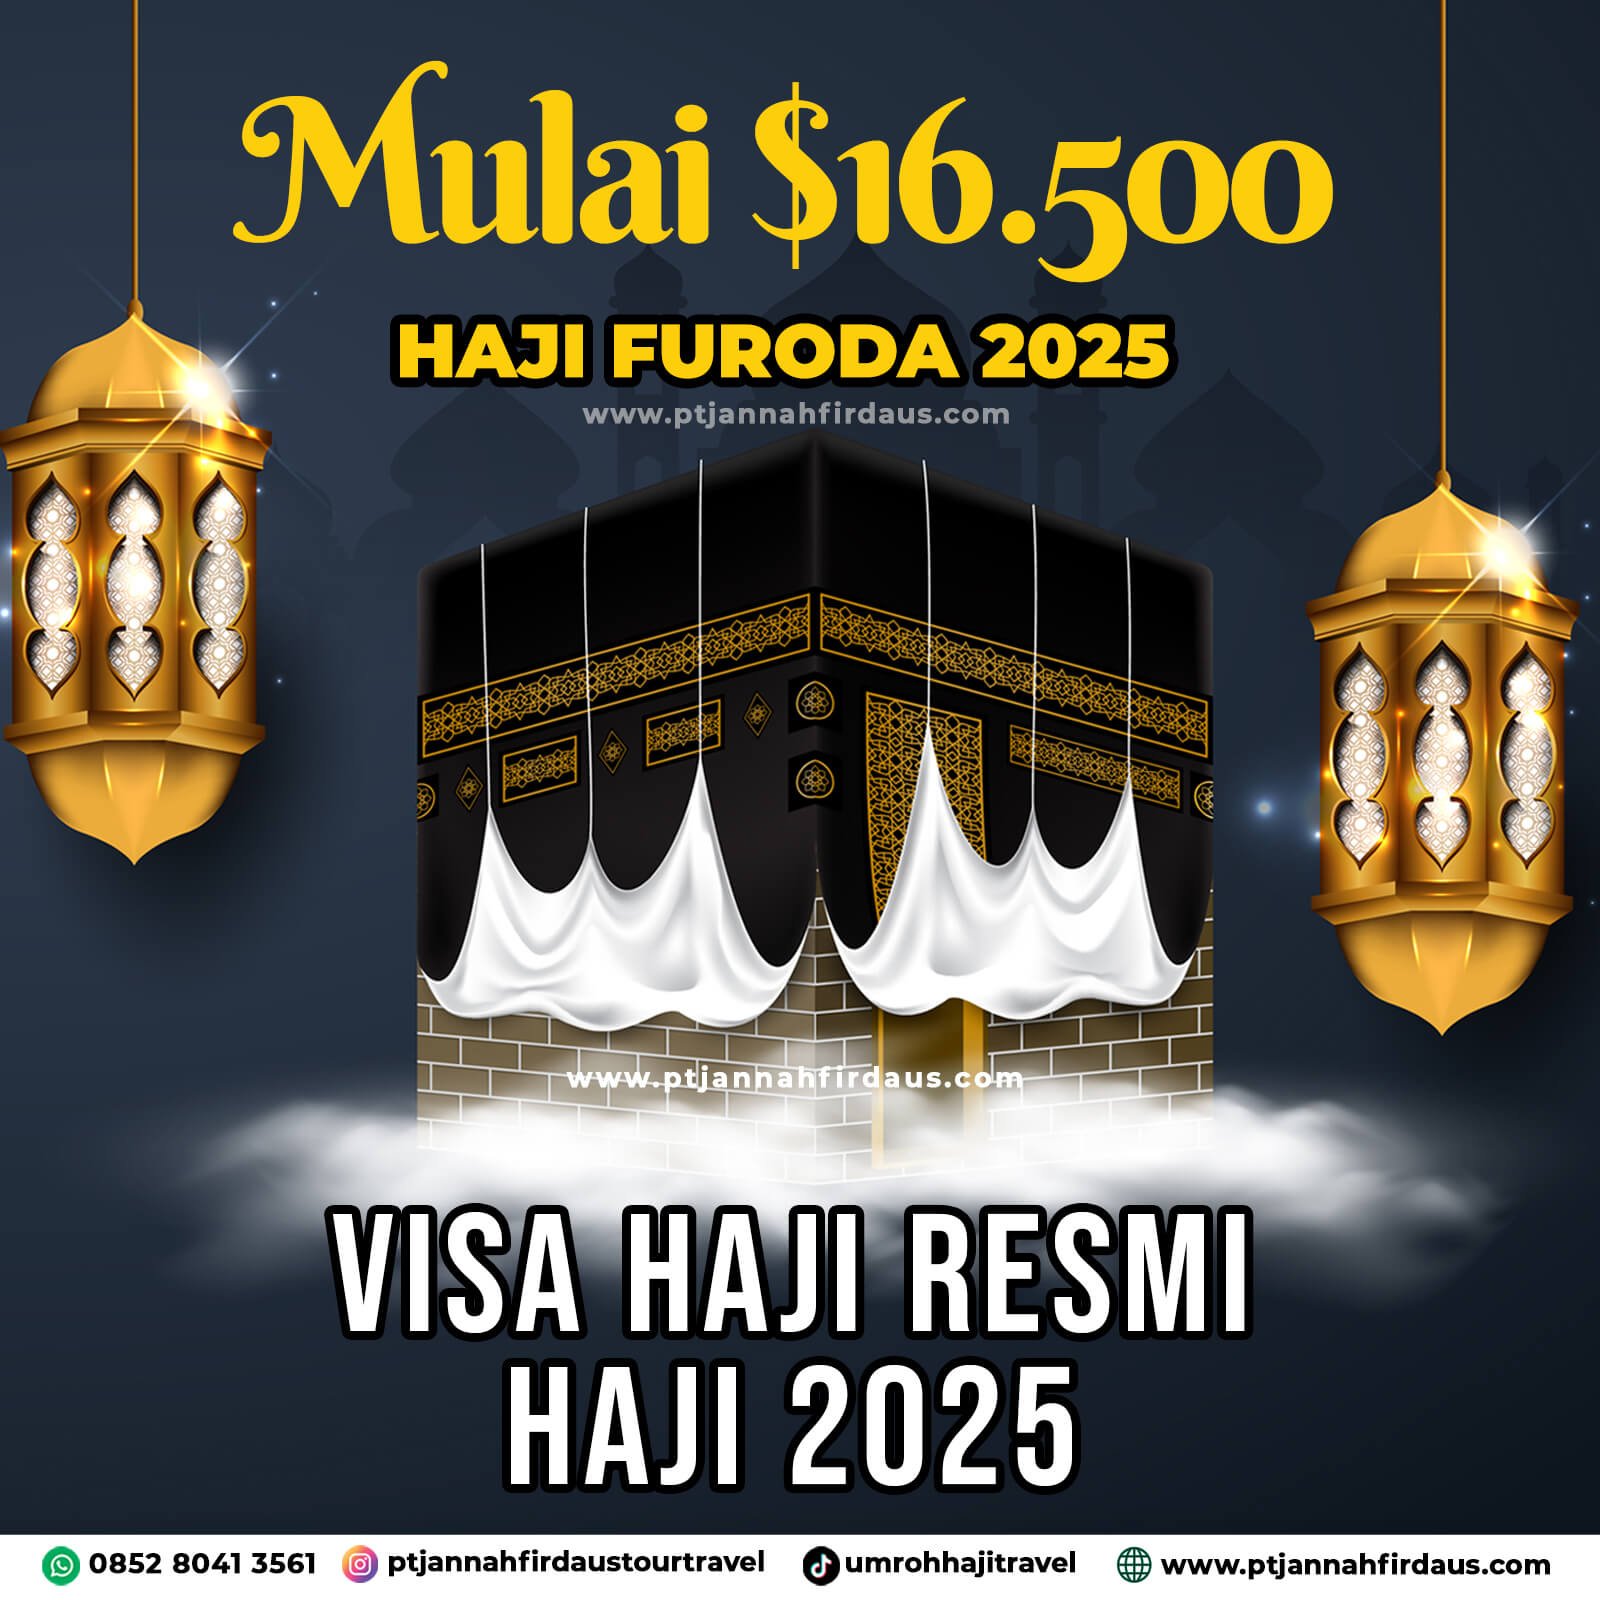 Haji Furoda 2025 Jannah Firdaus Visa Haji Resmi Haji Tanpa Antre 1446H